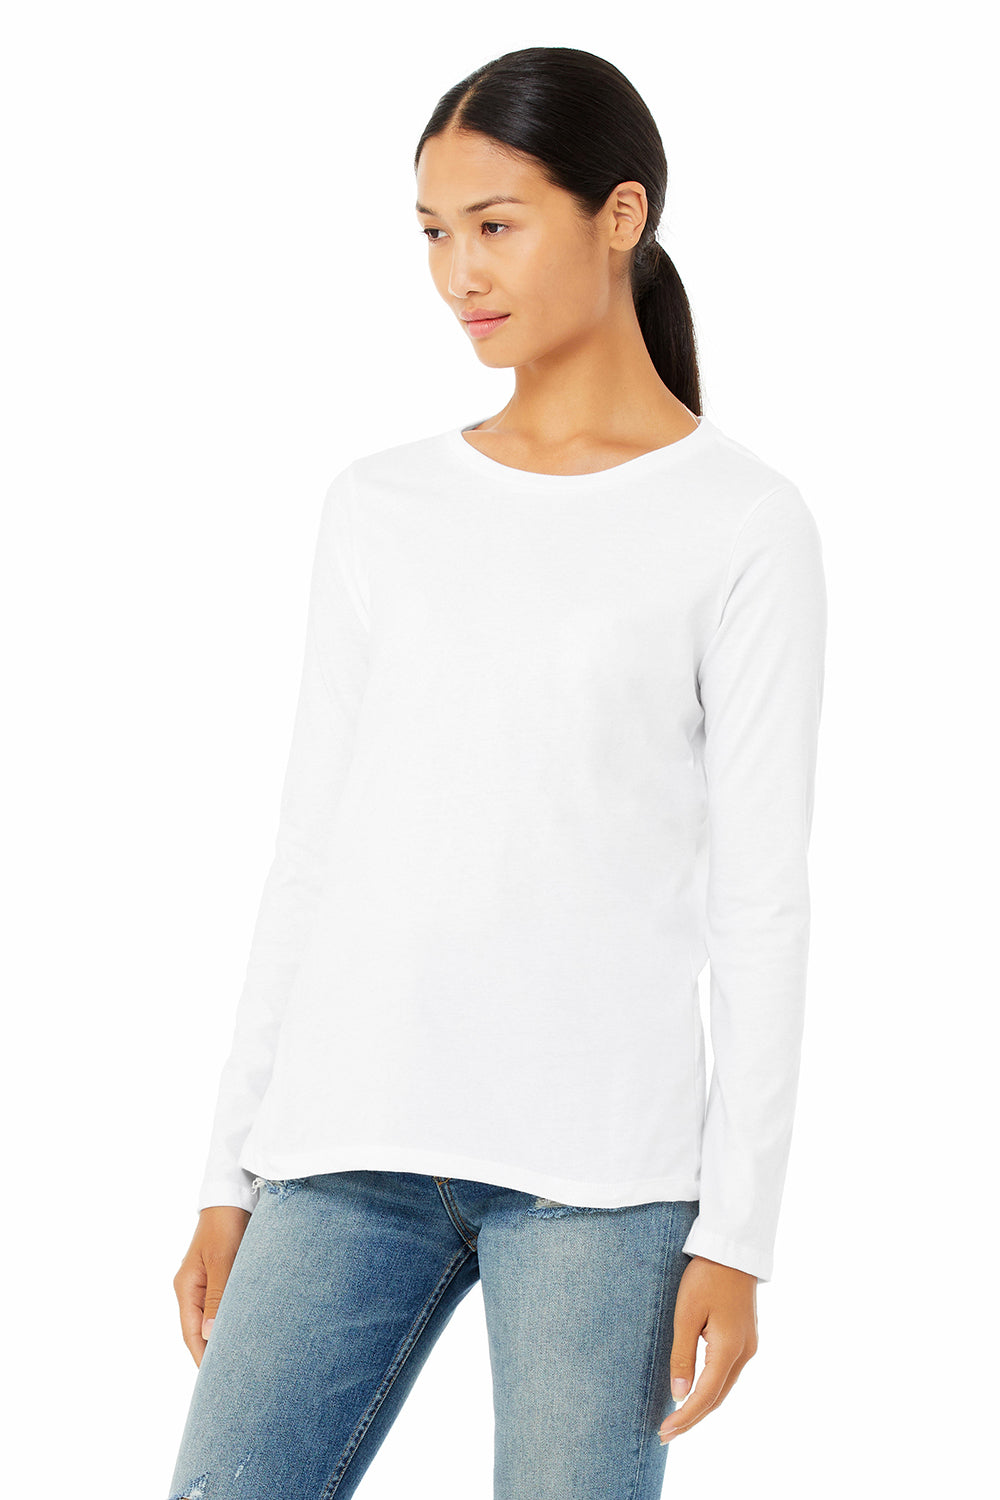 Bella + Canvas B6500/6500 Womens Jersey Long Sleeve Crewneck T-Shirt White Model 3Q